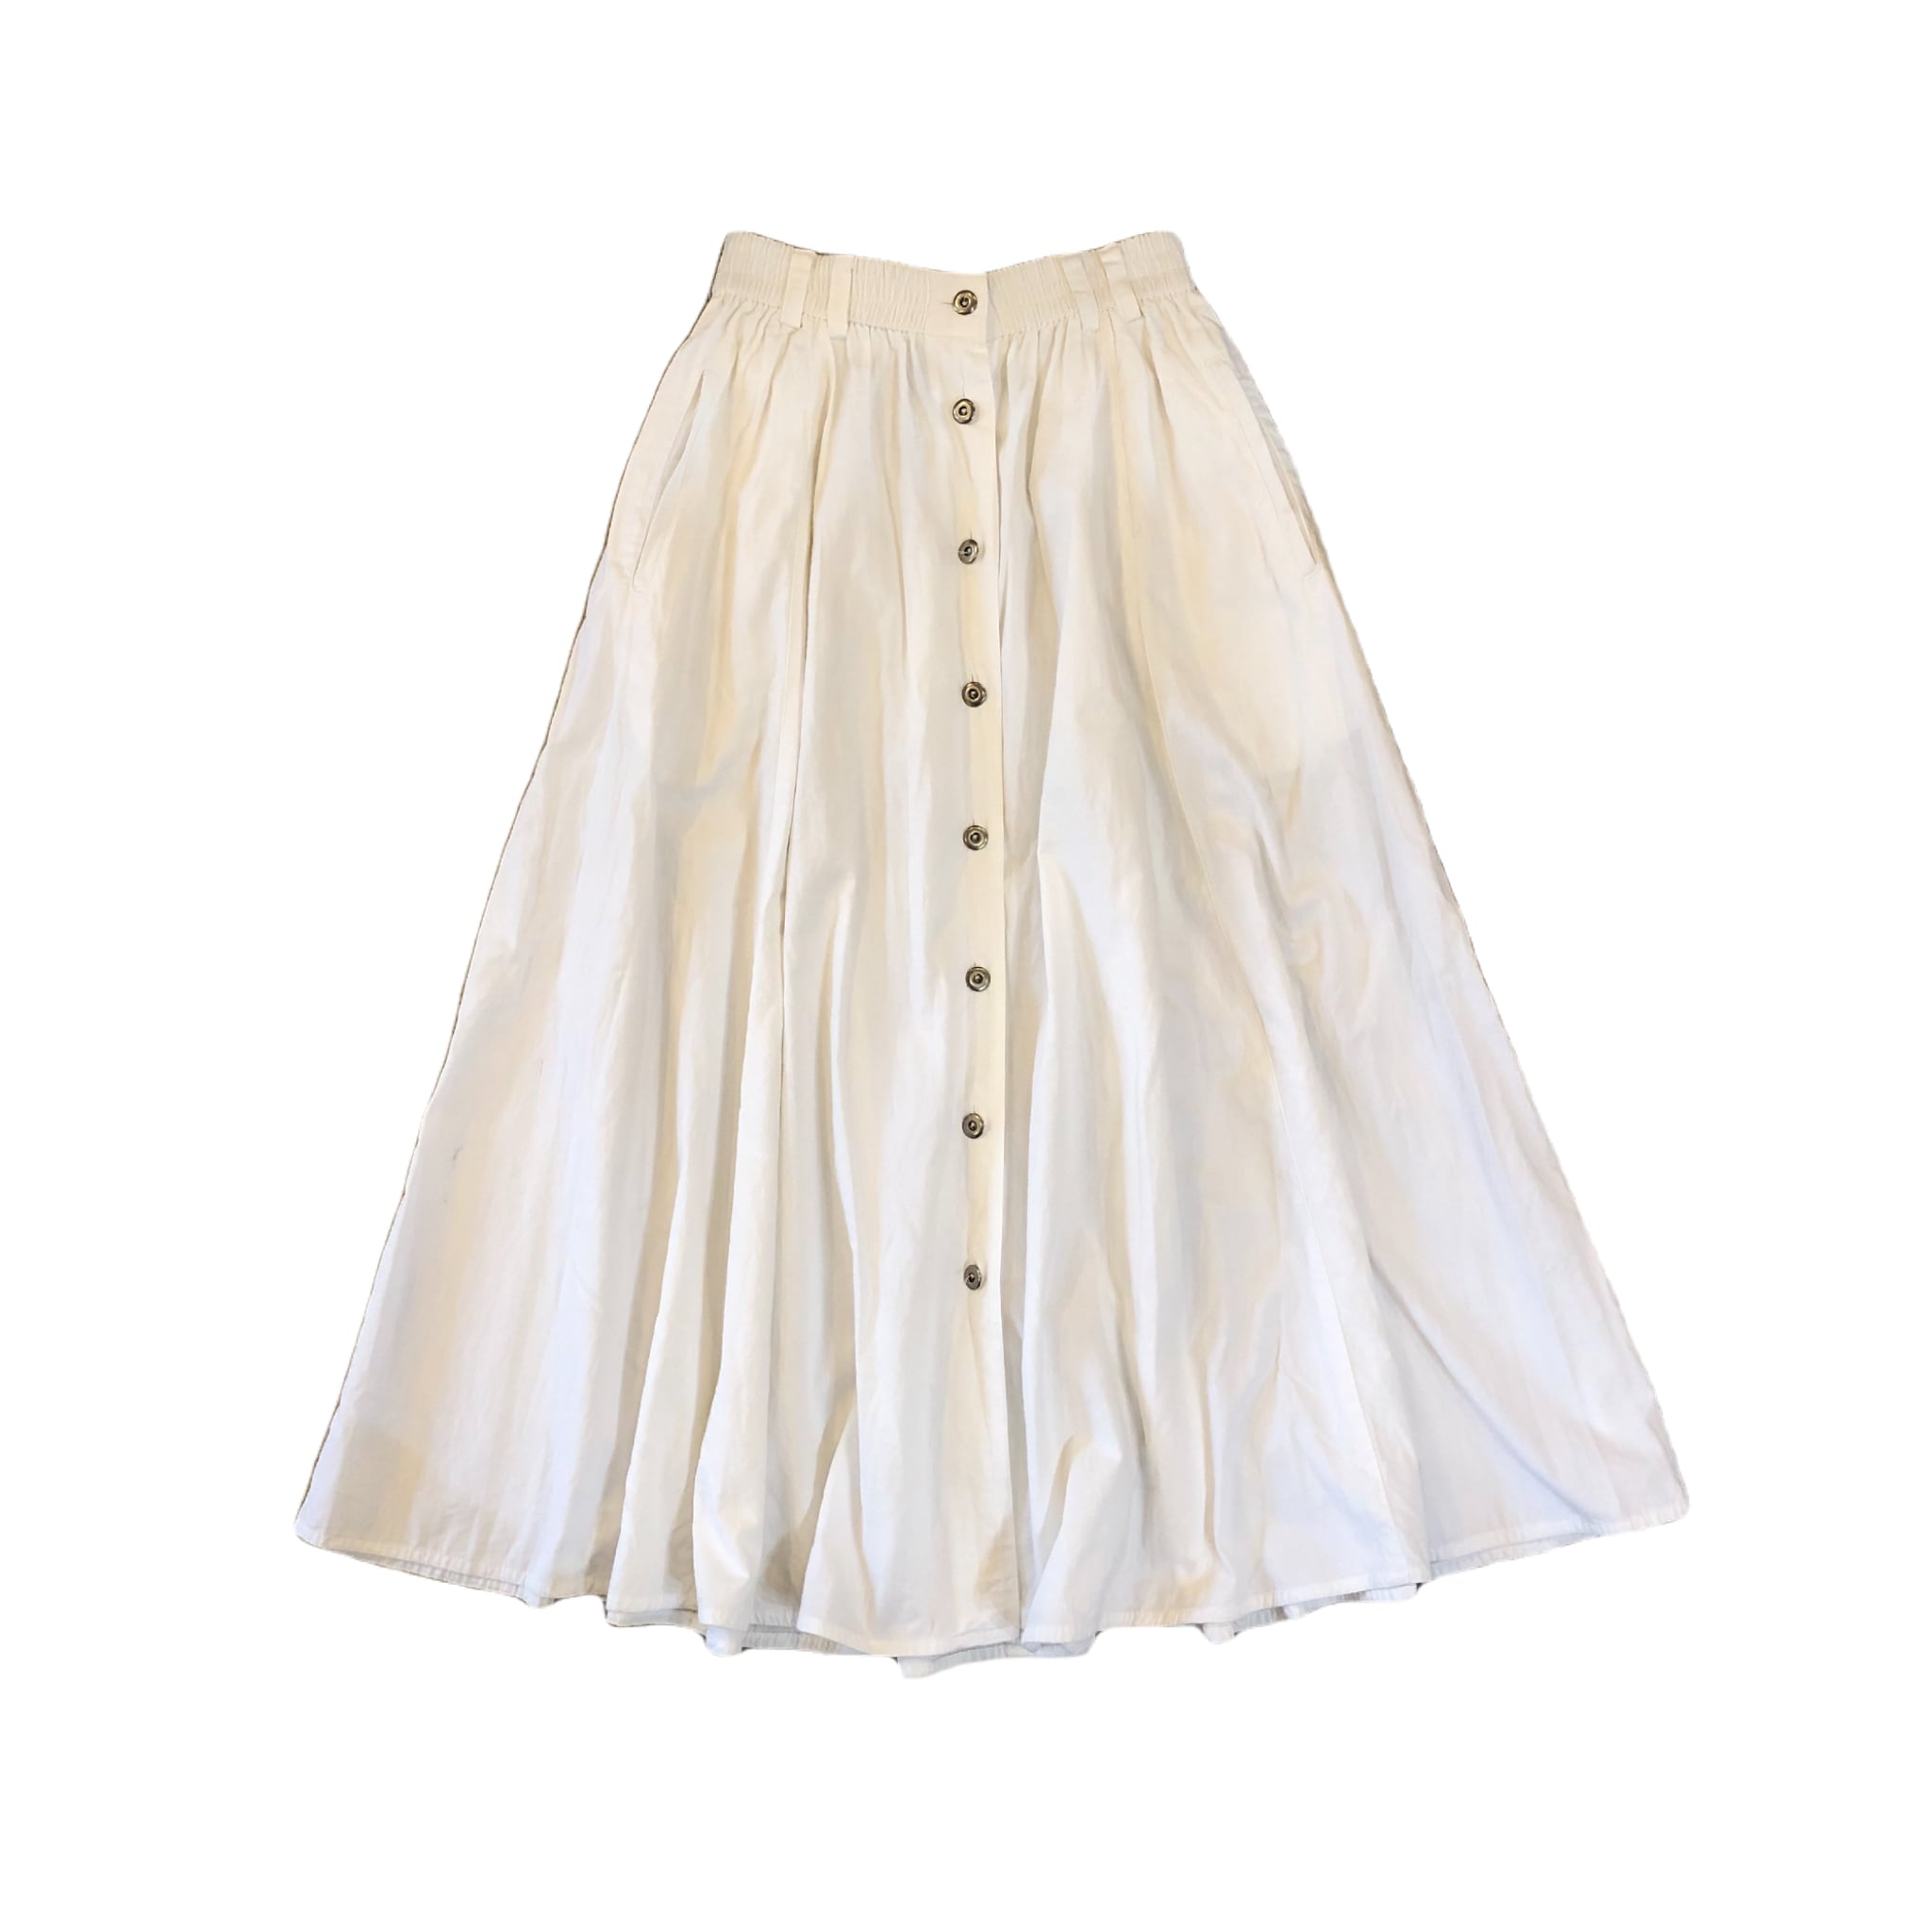 Lizsport White Long Skirt ¥5,500+tax